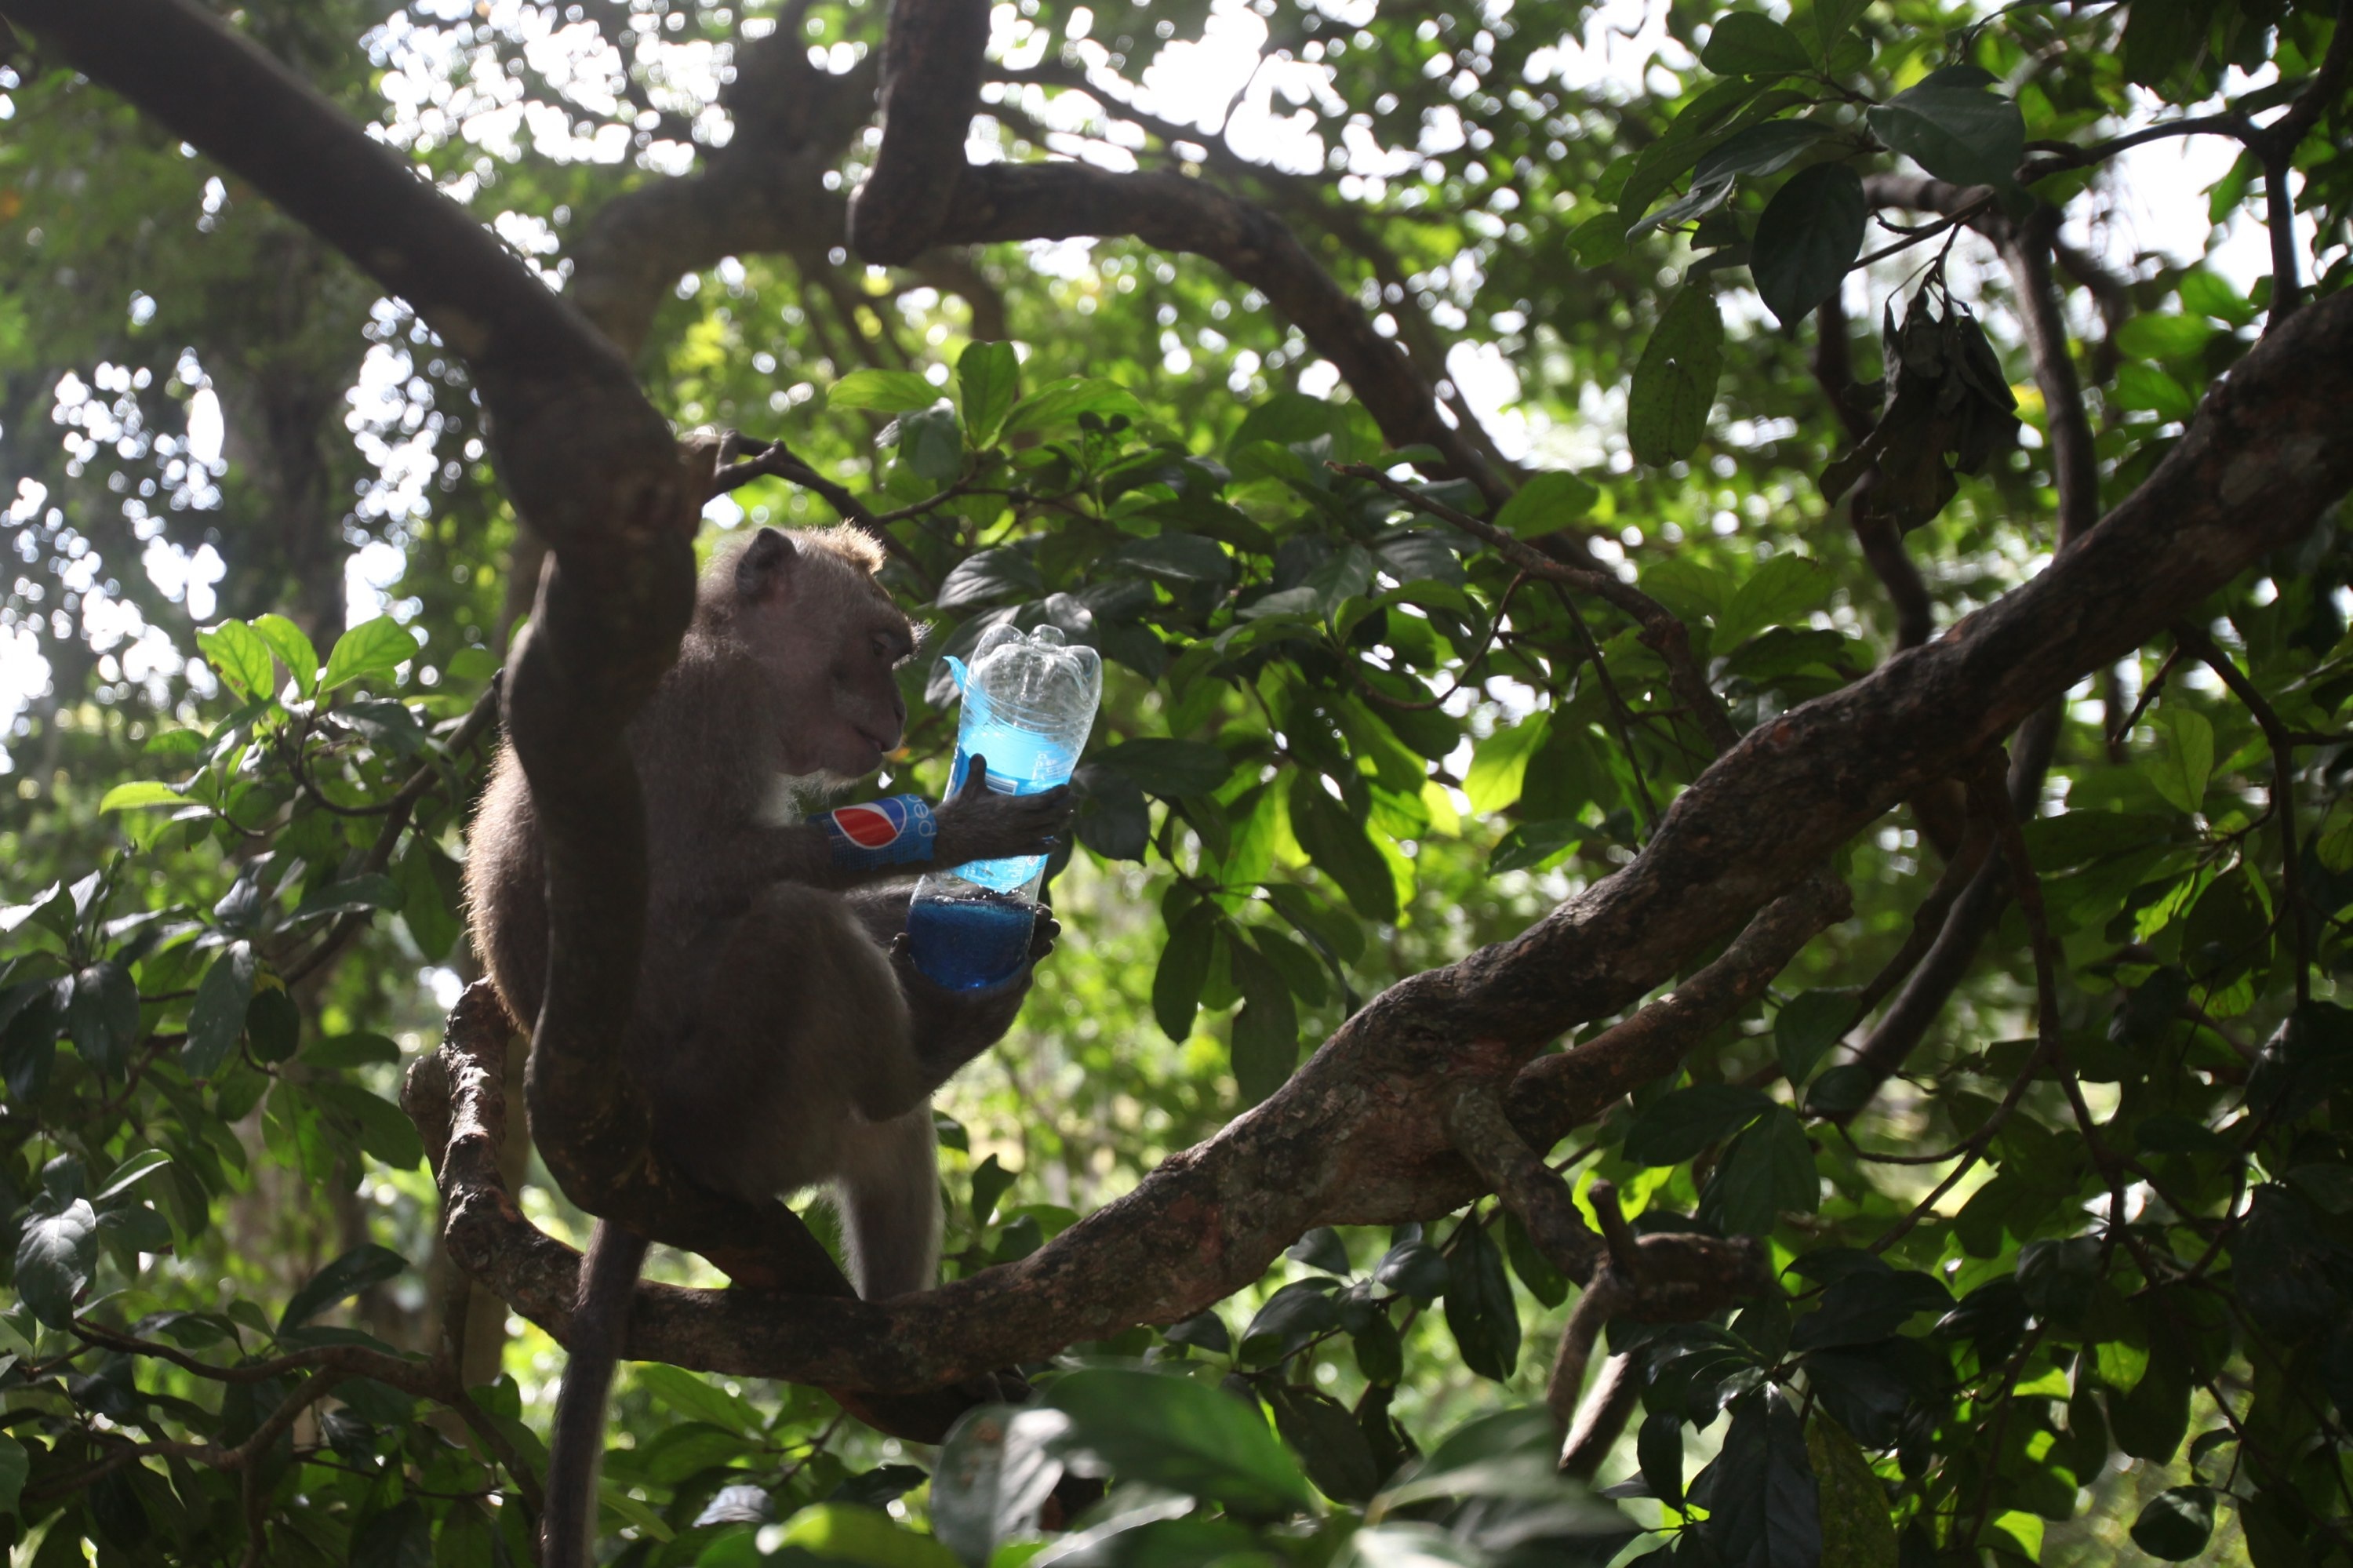 Jungle monkeys. Фото древних статуй в городе обезьян где нет обезьян джунглей. Video r34 Monkey in Jungle with Laptop.